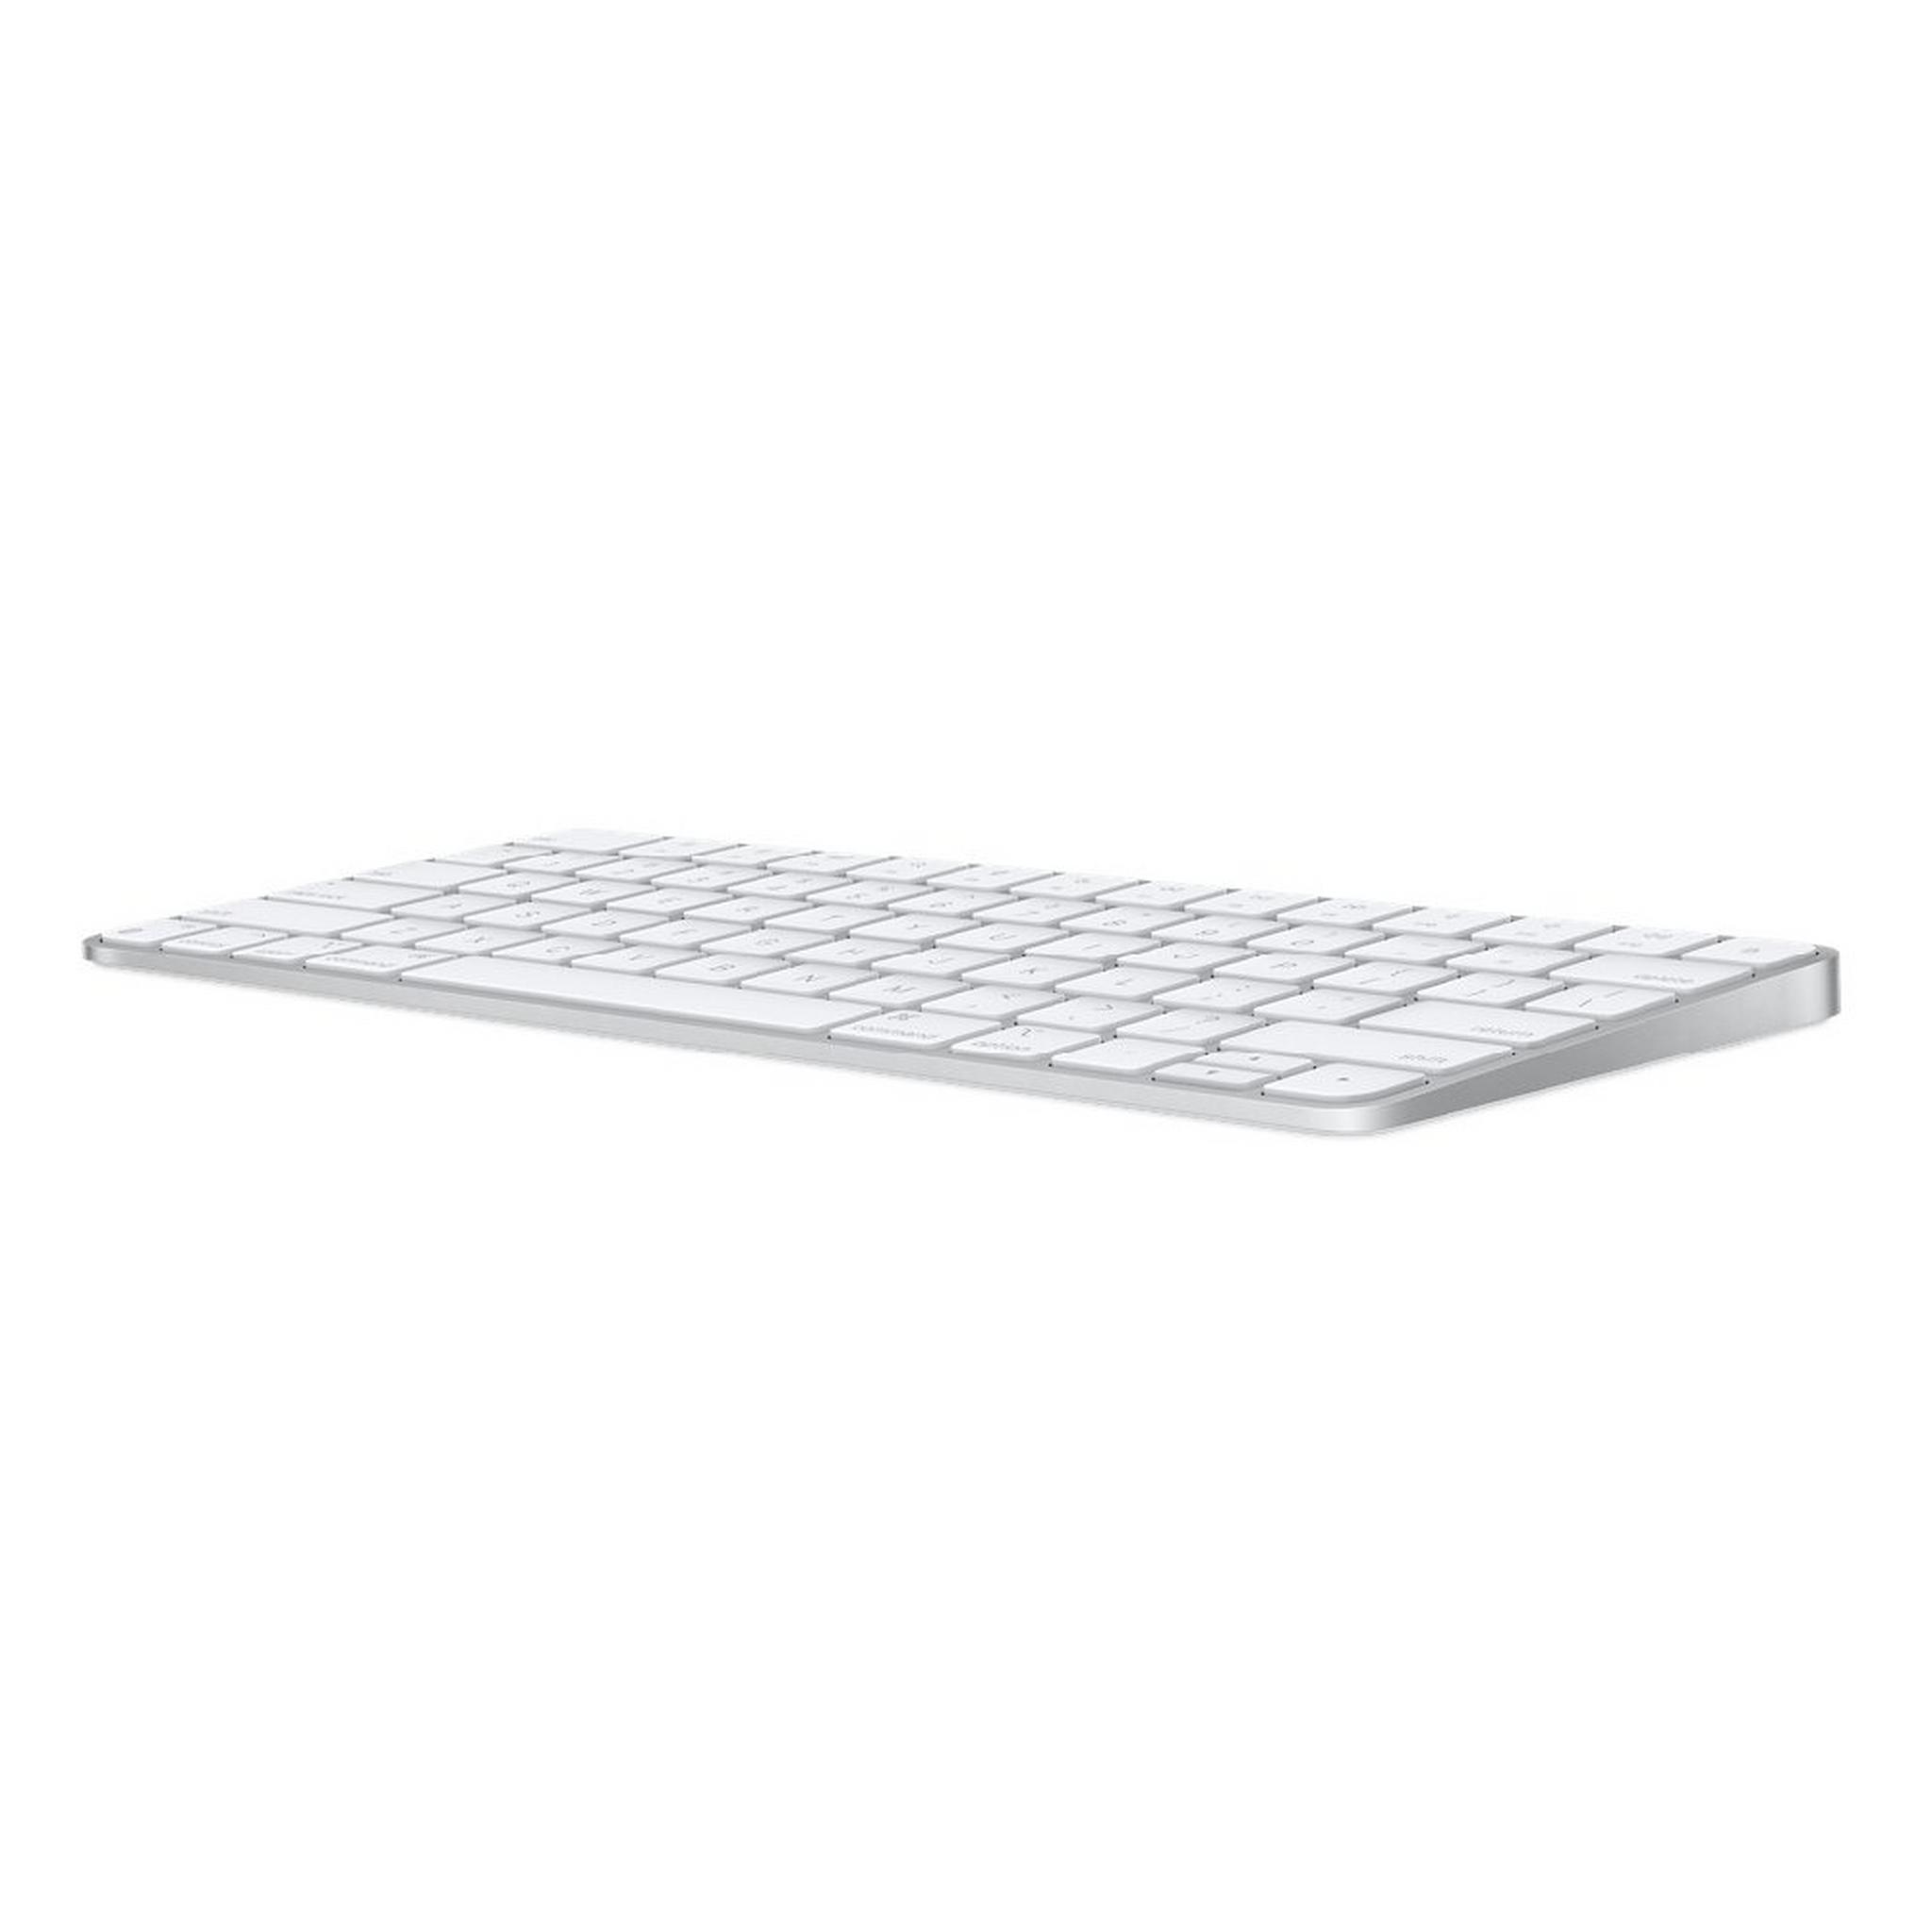 Apple EN/AR Magic Keyboard - Silver